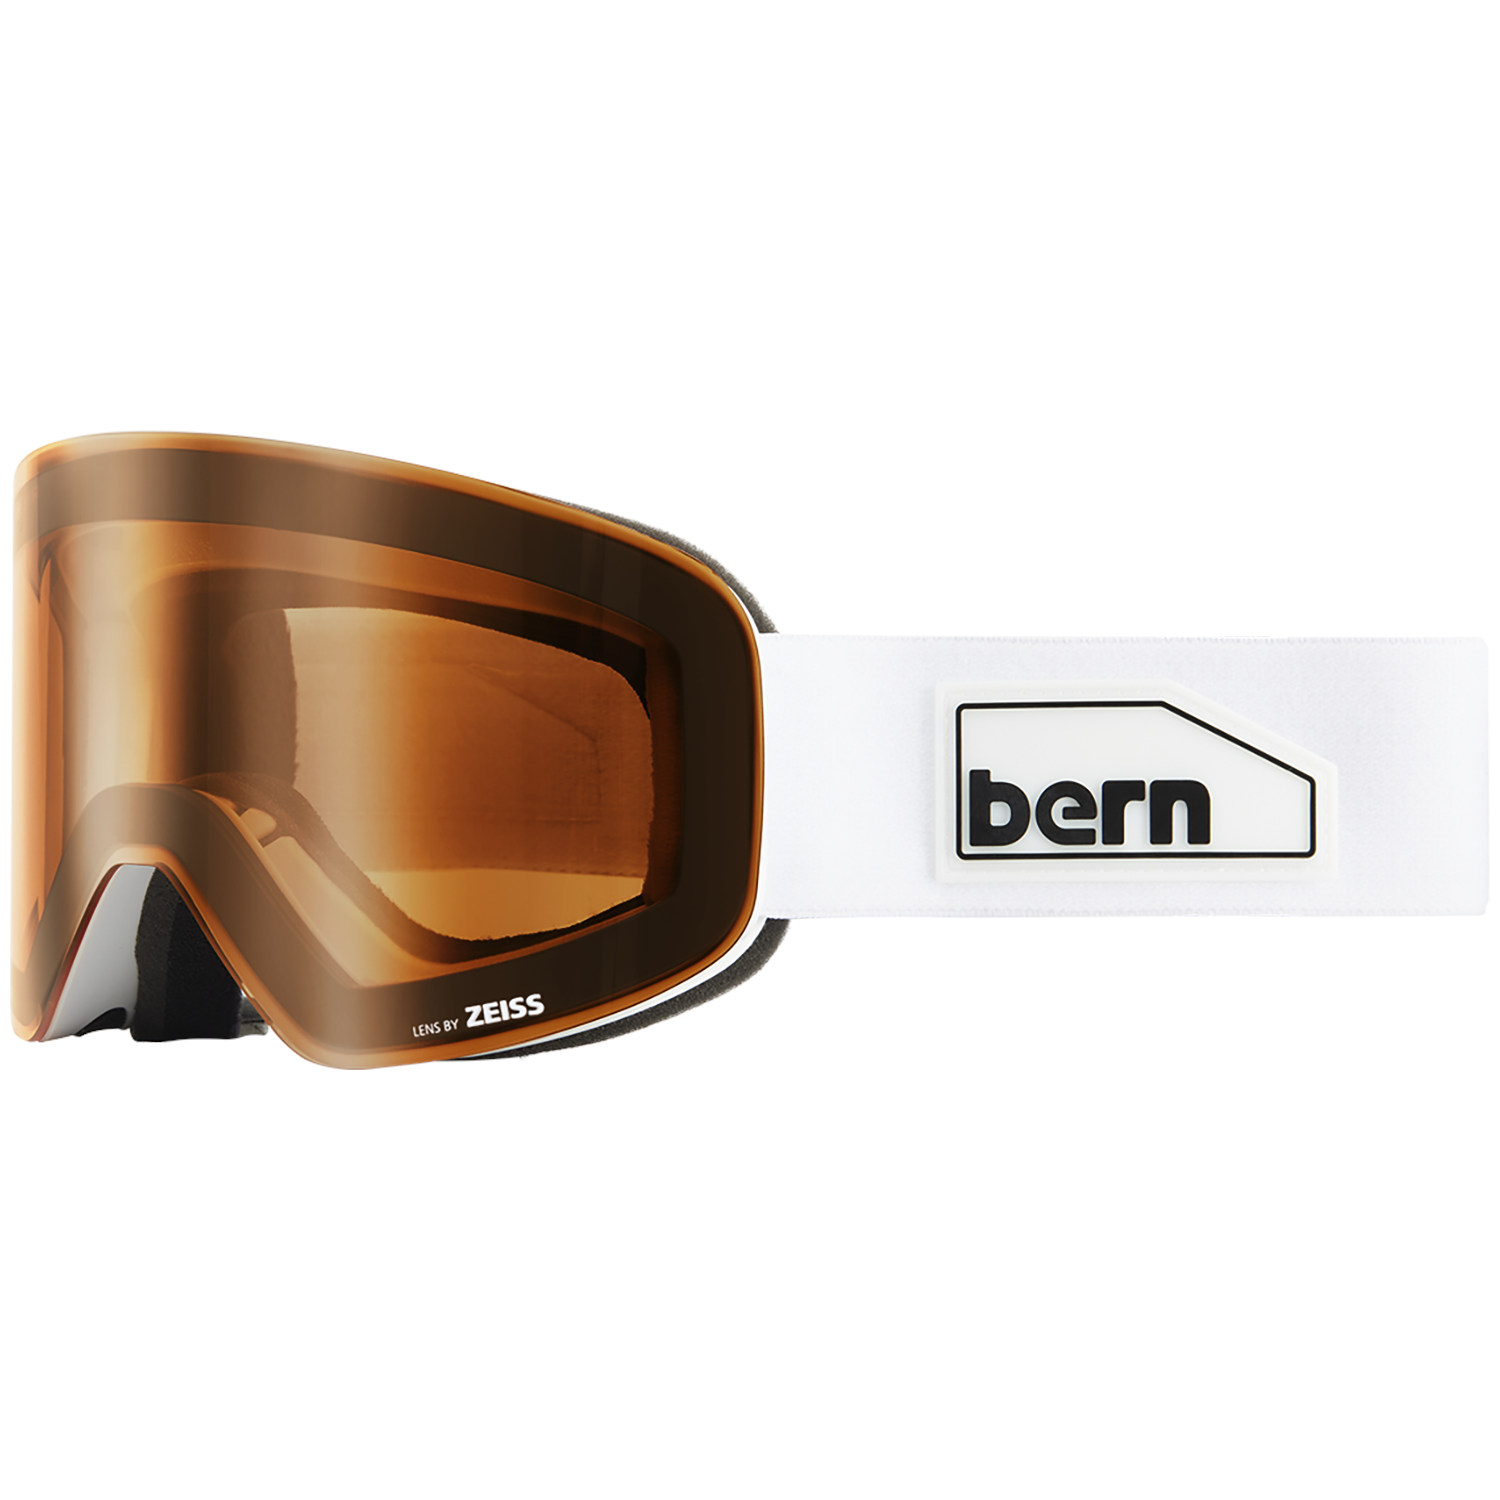 Bern B-1 Goggles